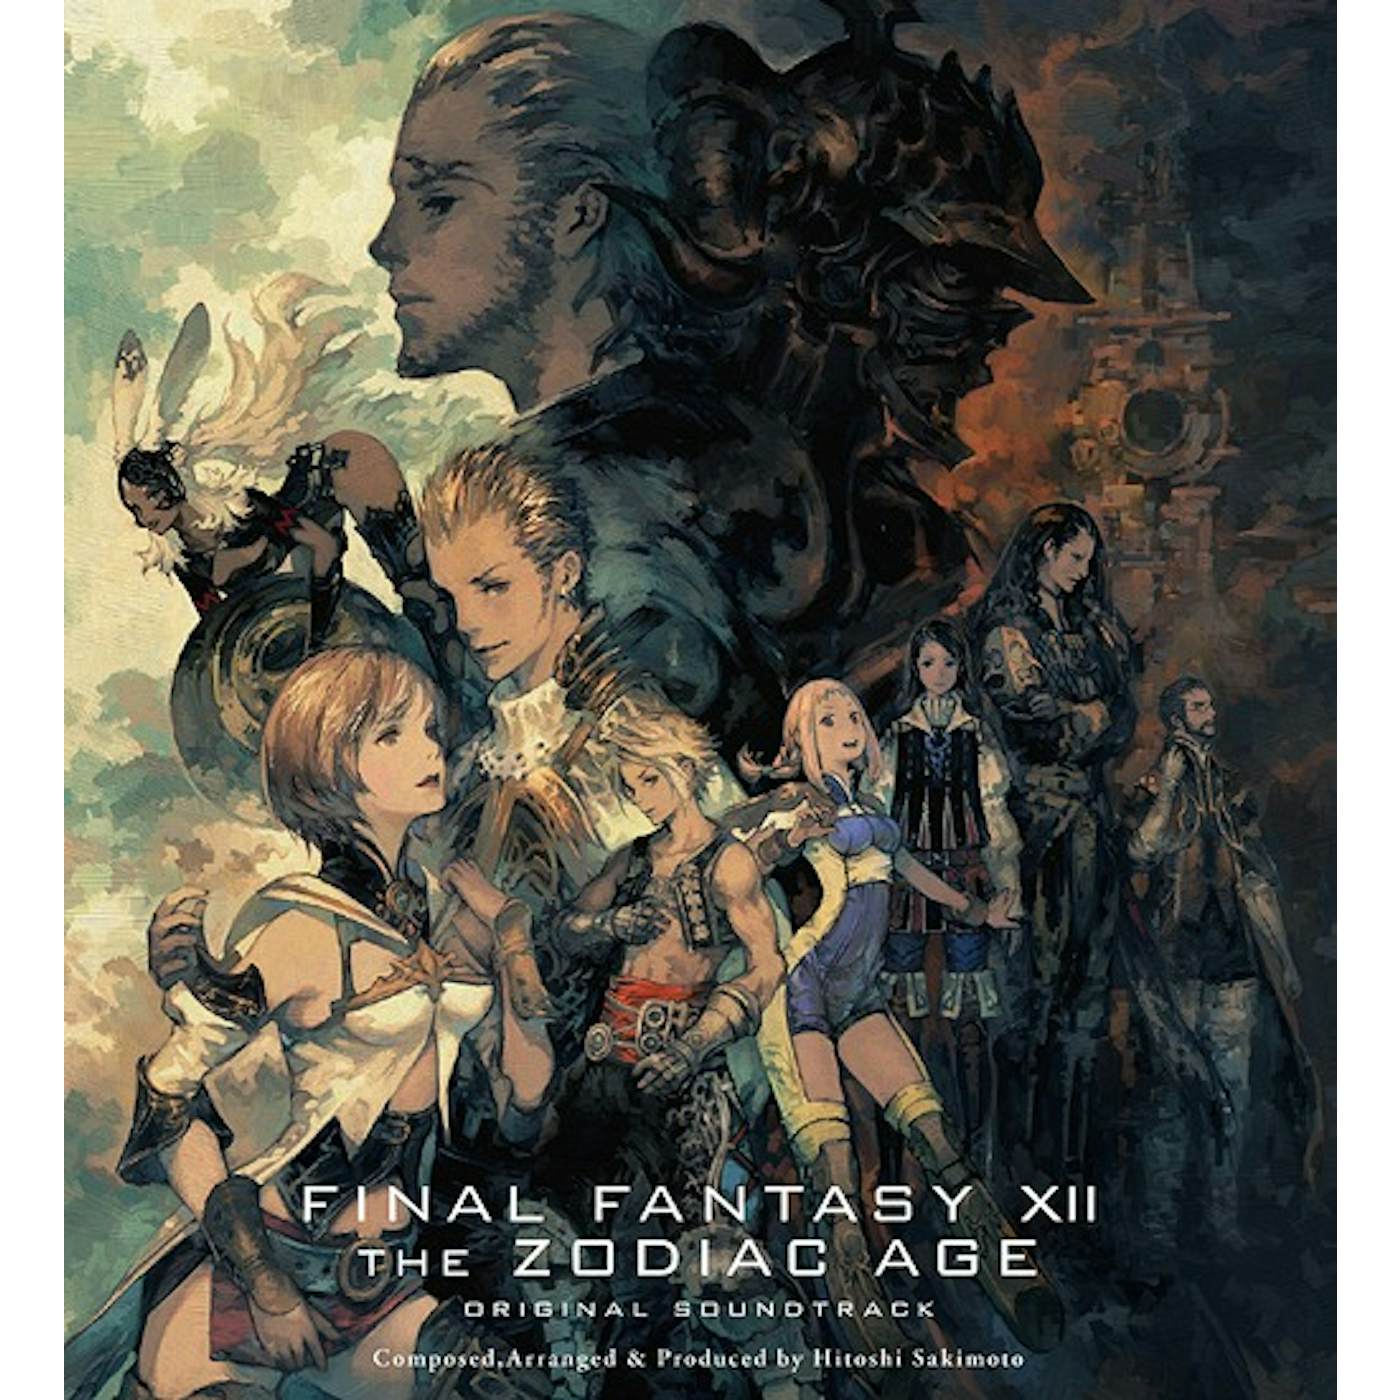 Final Fantasy ZODIAC AGE : FANTASY XII (LIMITED) / Original Soundtrack CD